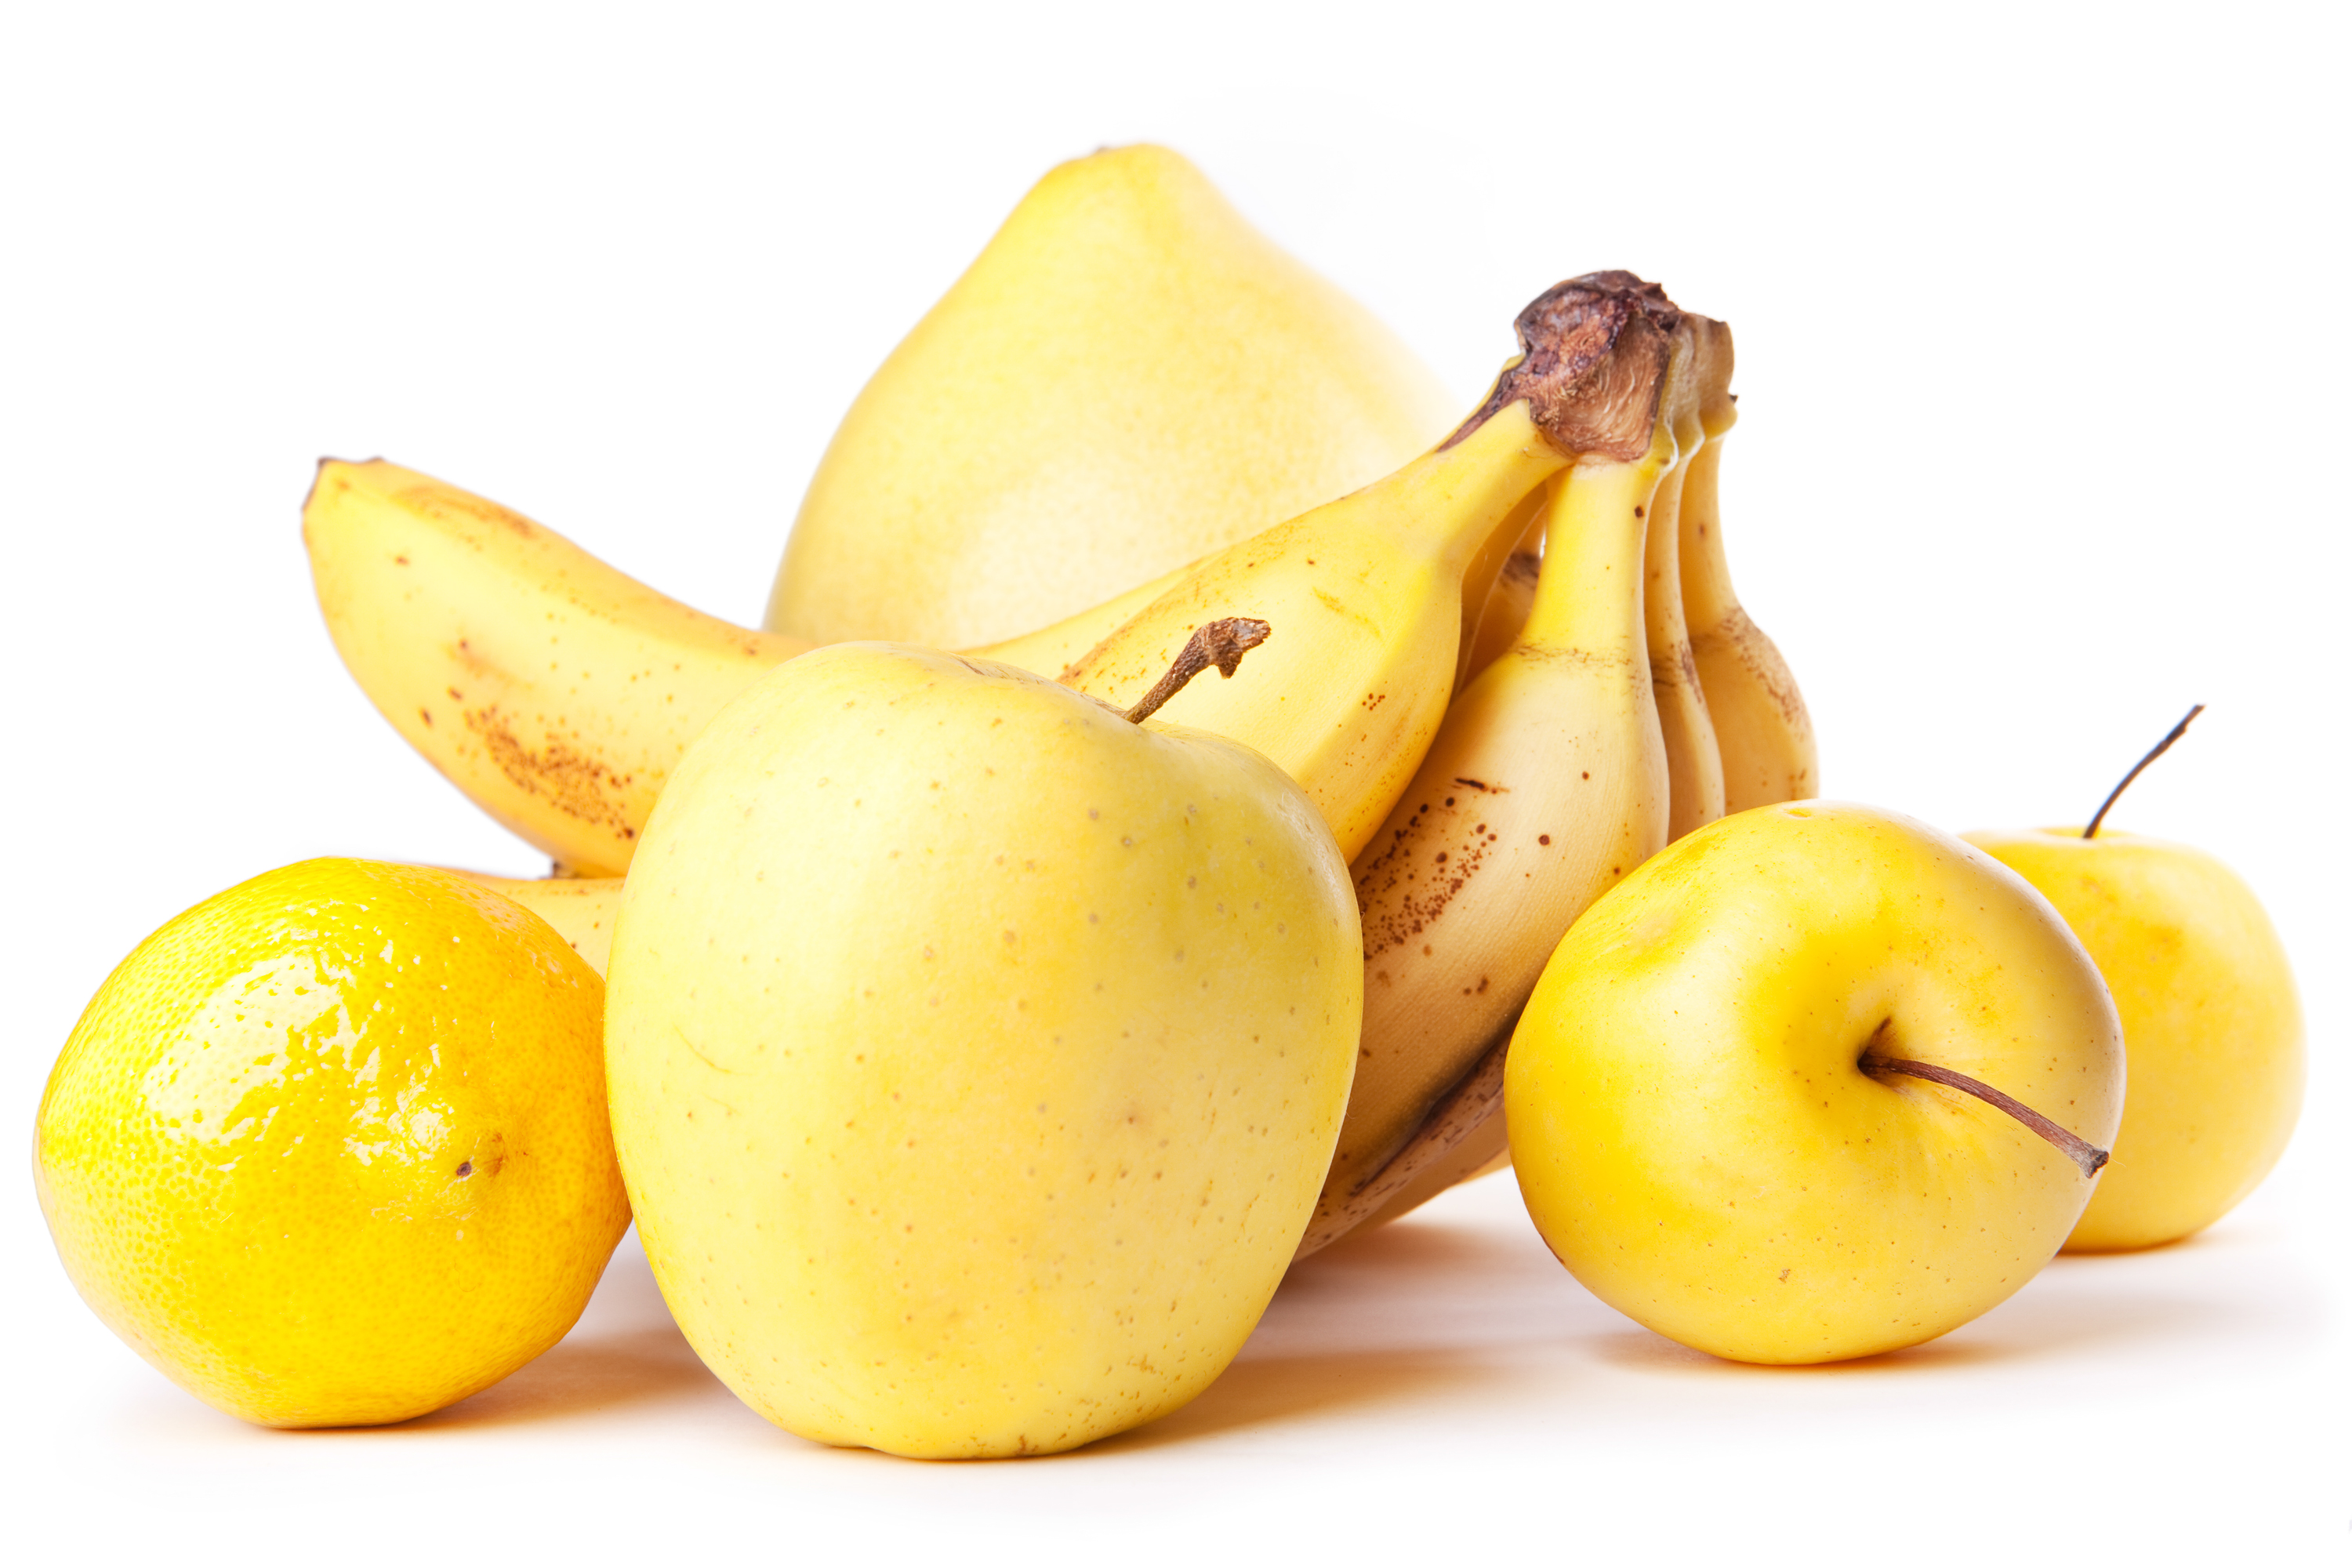 Banana and apples photo